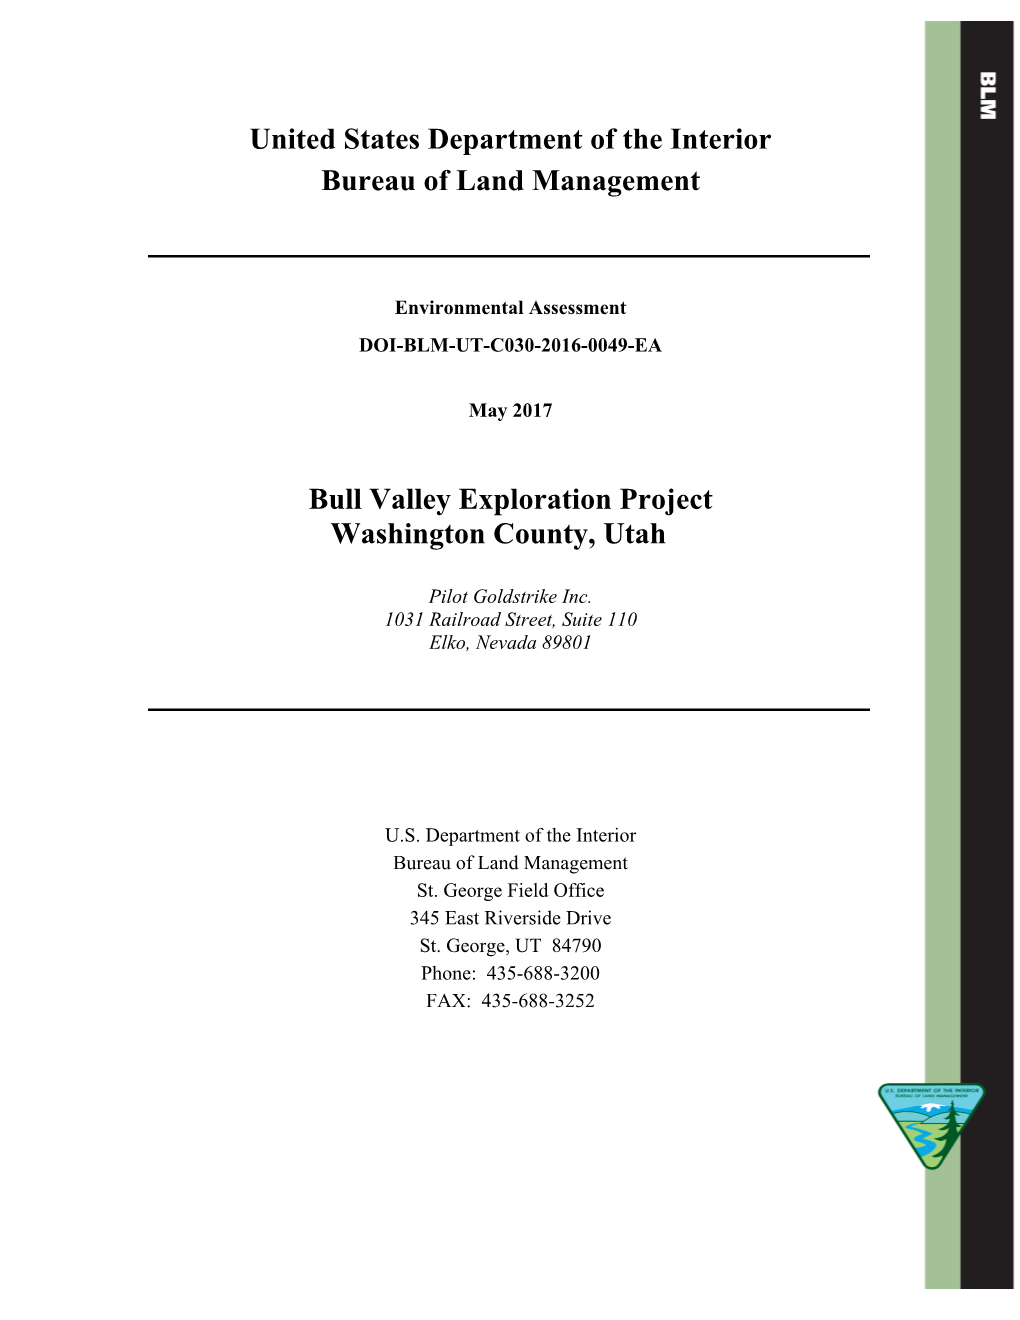 Bull Valley Exploration Project Environmental Assessment May 2017 Pilot Goldstrike Inc